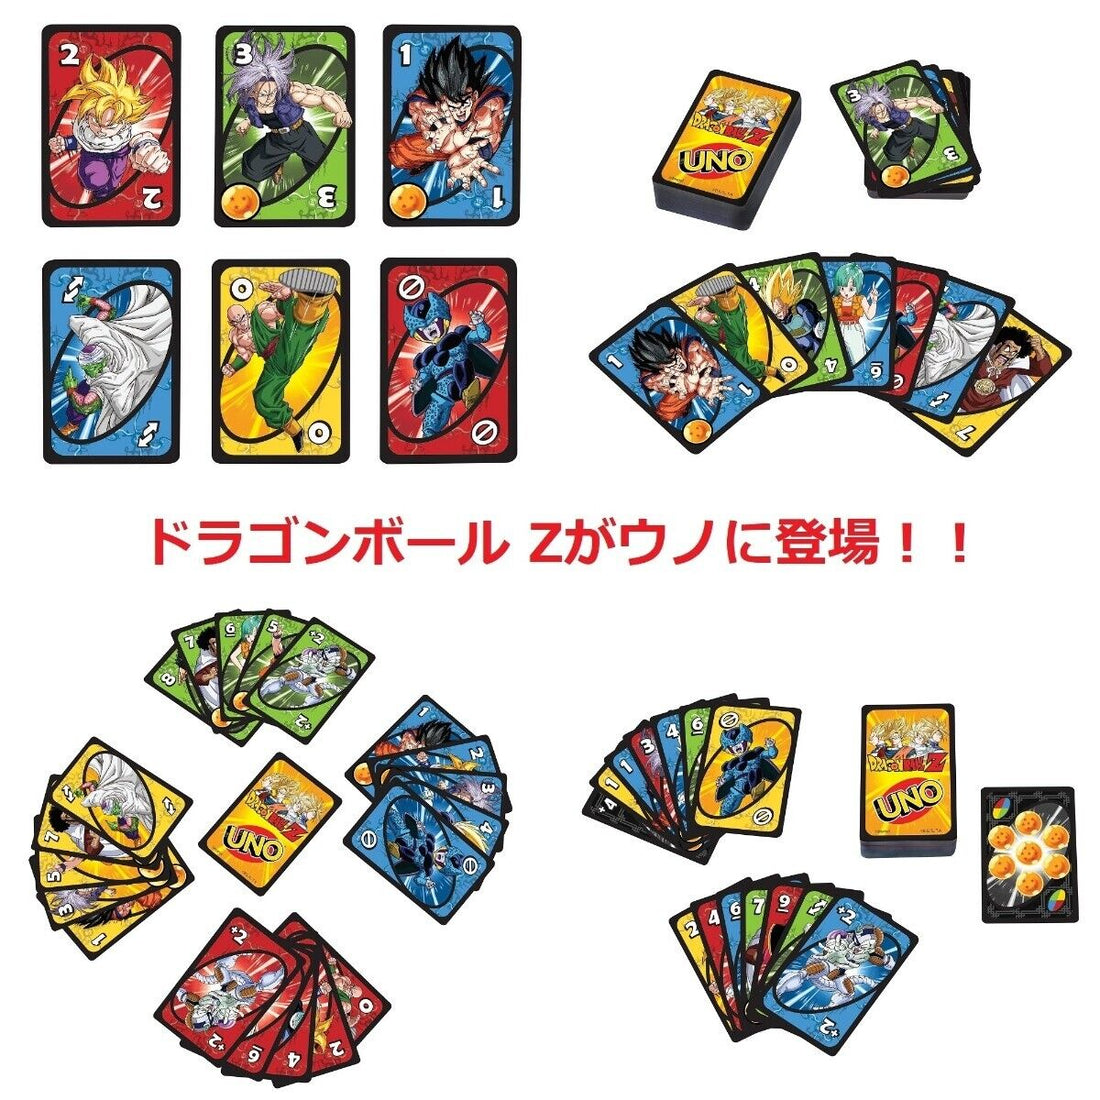 UNO Dragon Ball Z Card Game Japan